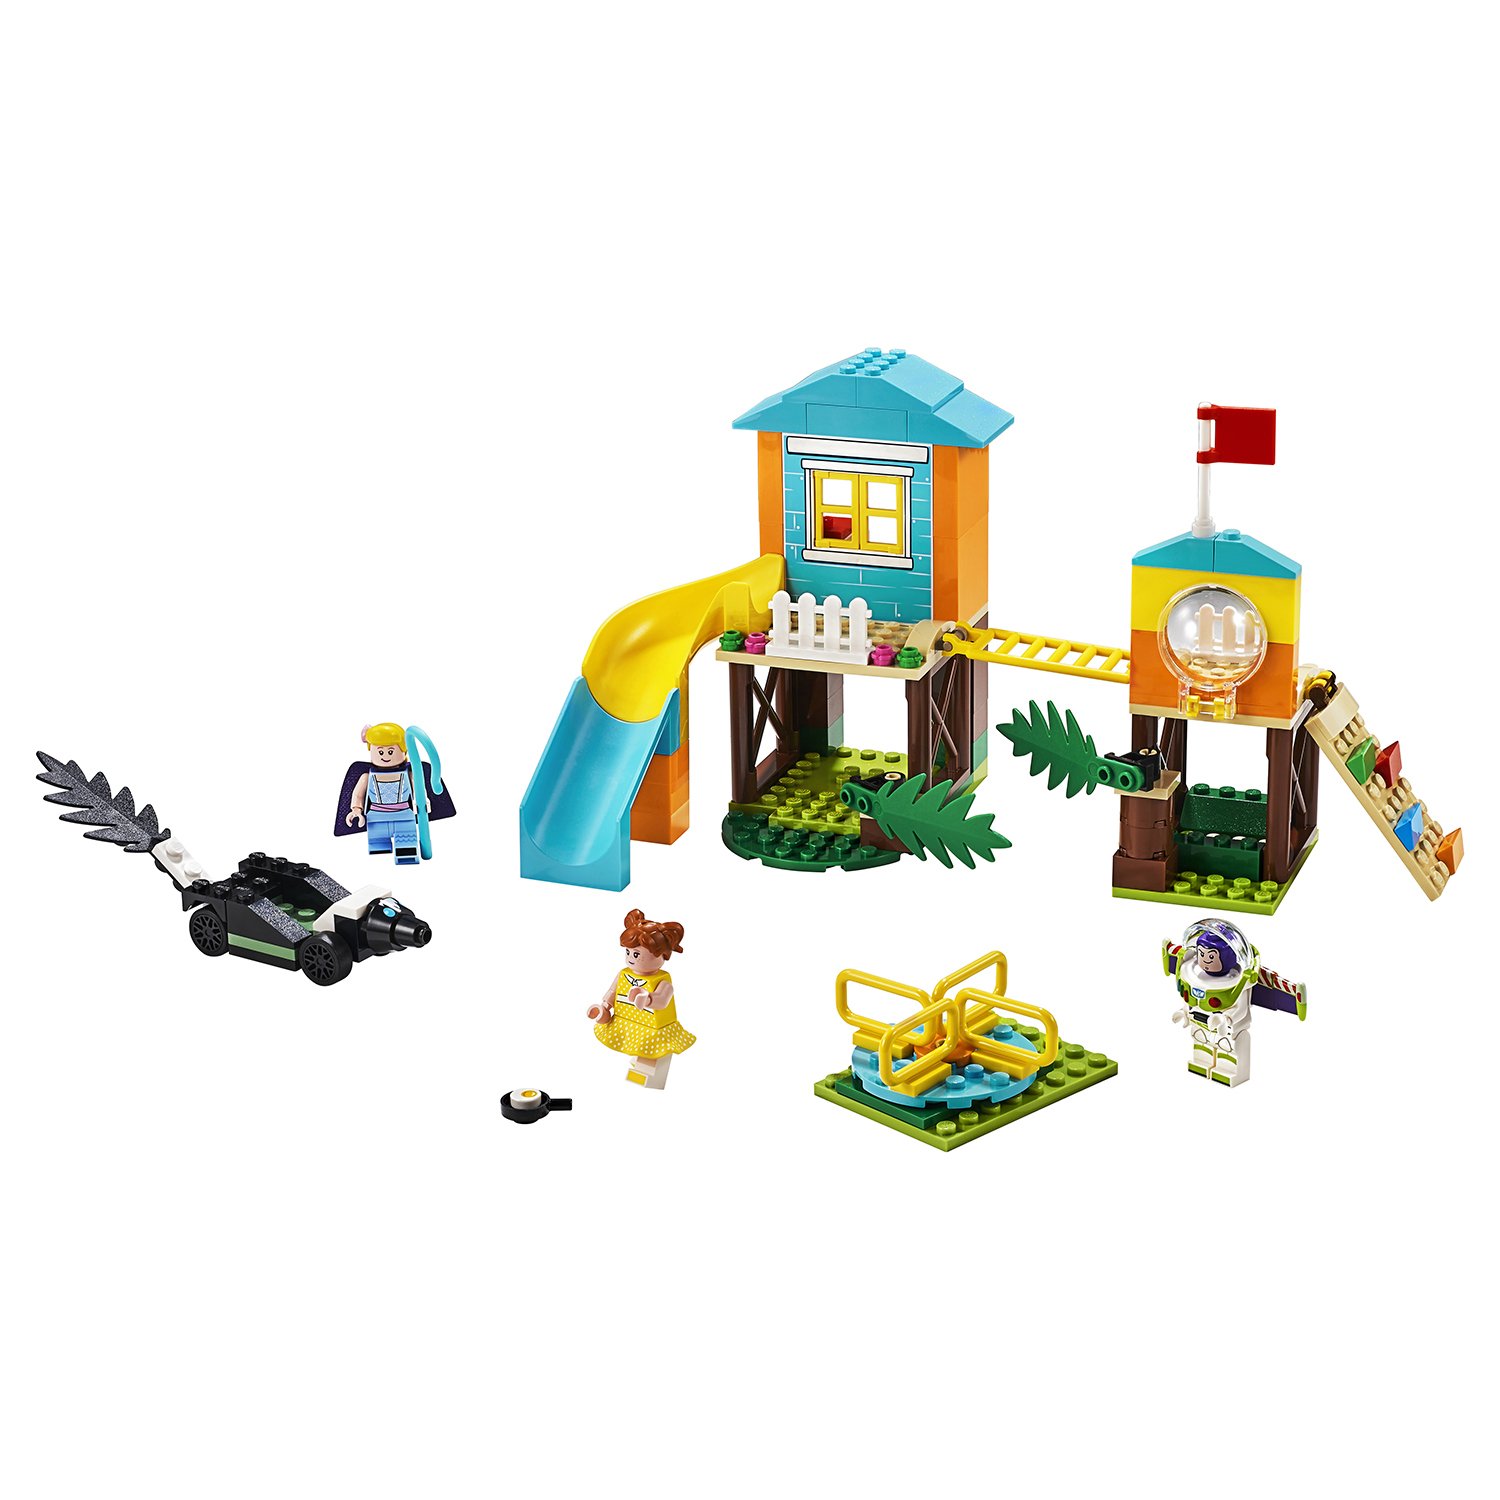 Lego Toy Story 10768 Приключения Базза и Бо Пип на детской площадке